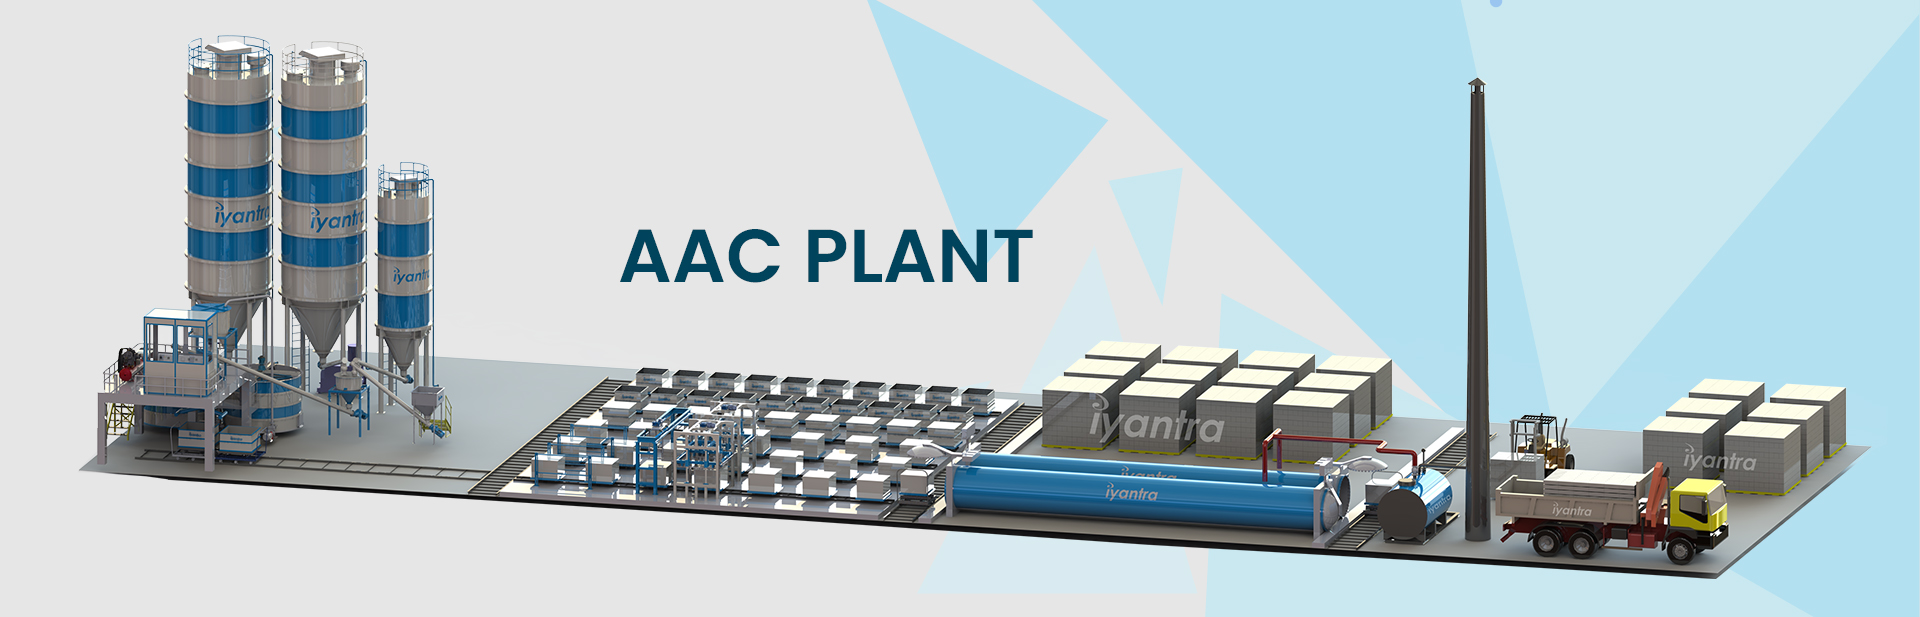 aac plant manufacturers visakhapatnam india